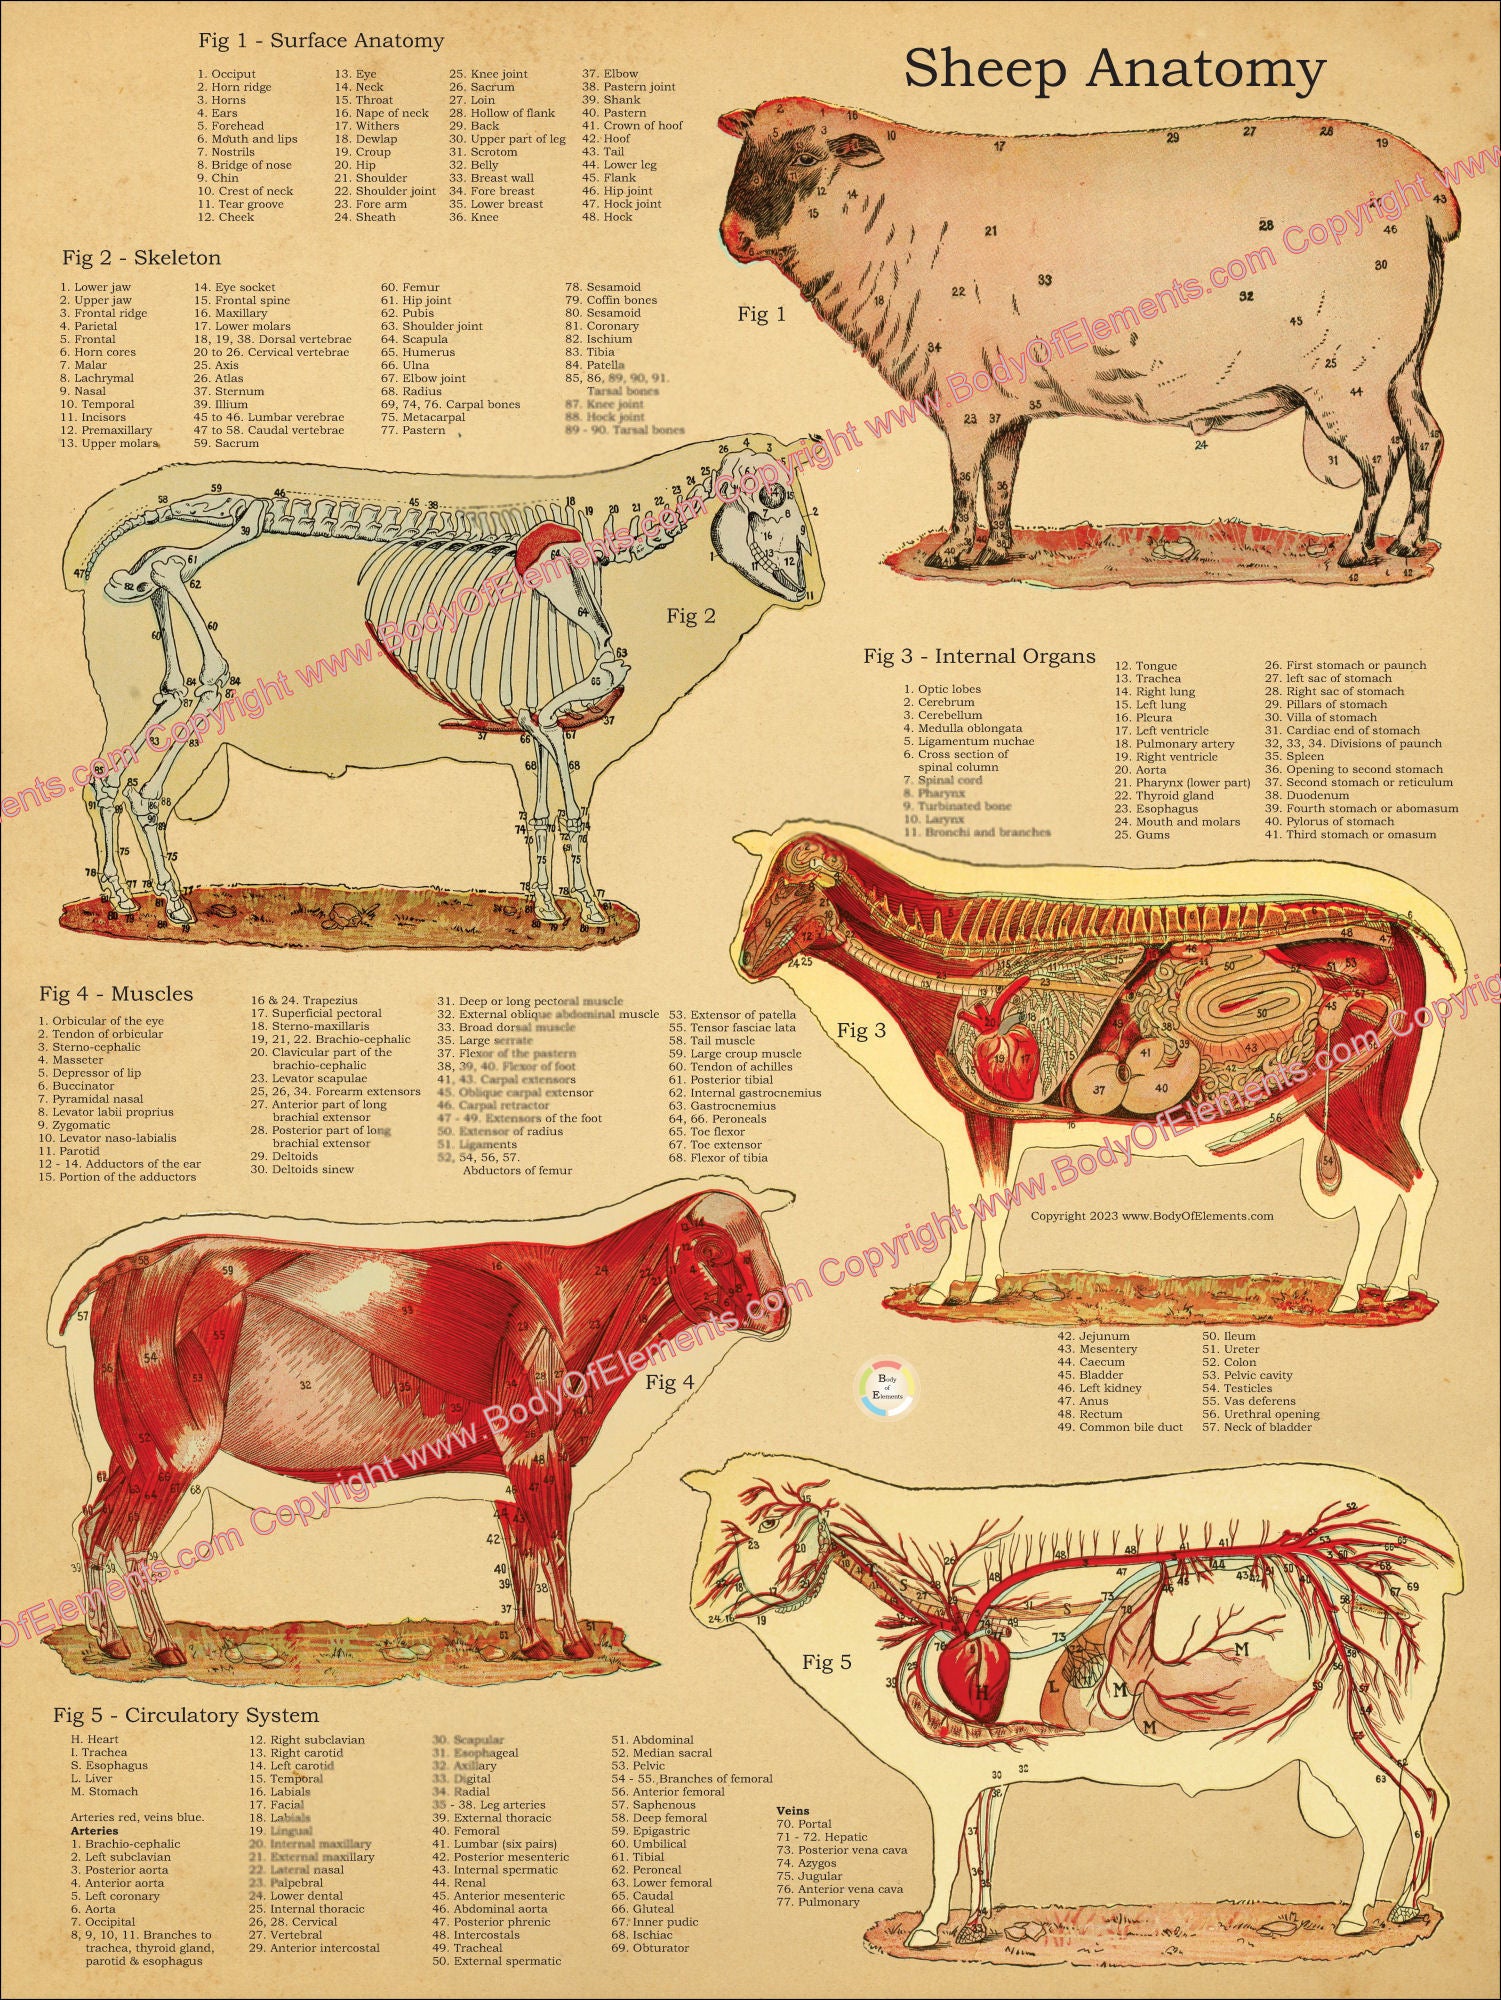 Sheep anatomical wall chart